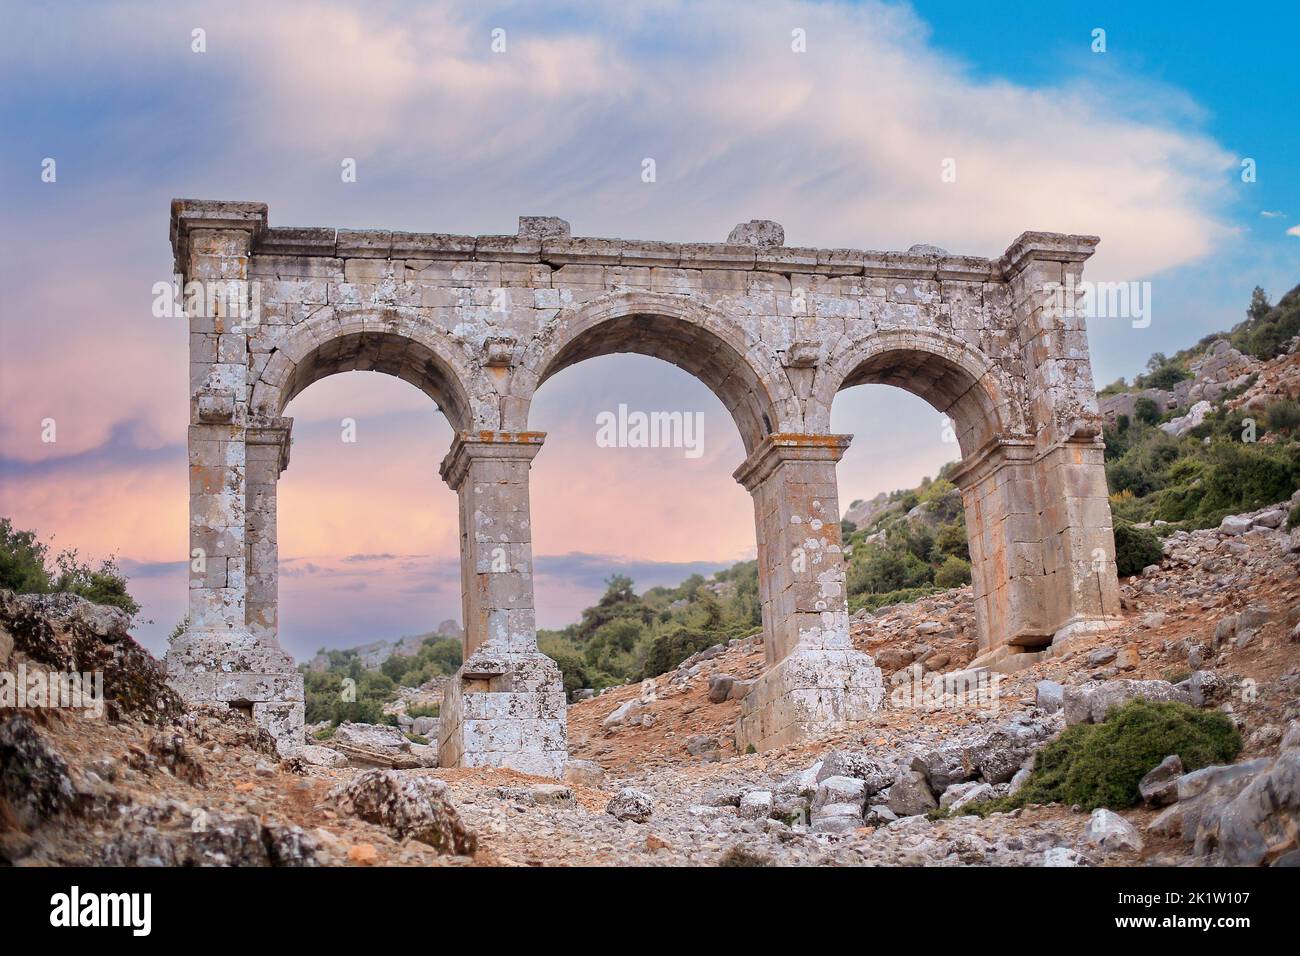 Ariassos antik kenti ve manzara fotoğrafçılığı Stock Photo